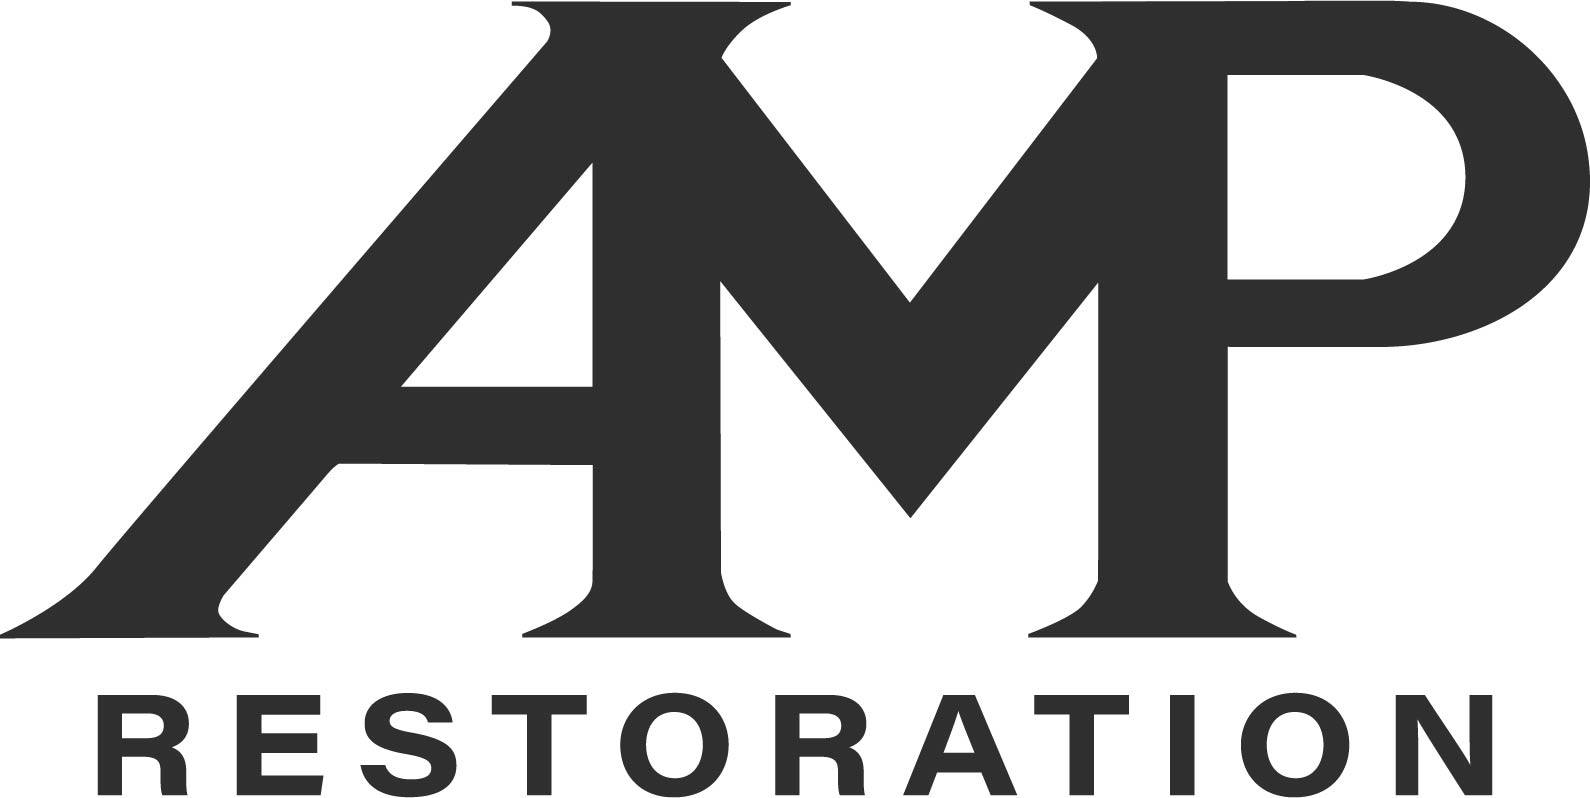 AMP Restoration